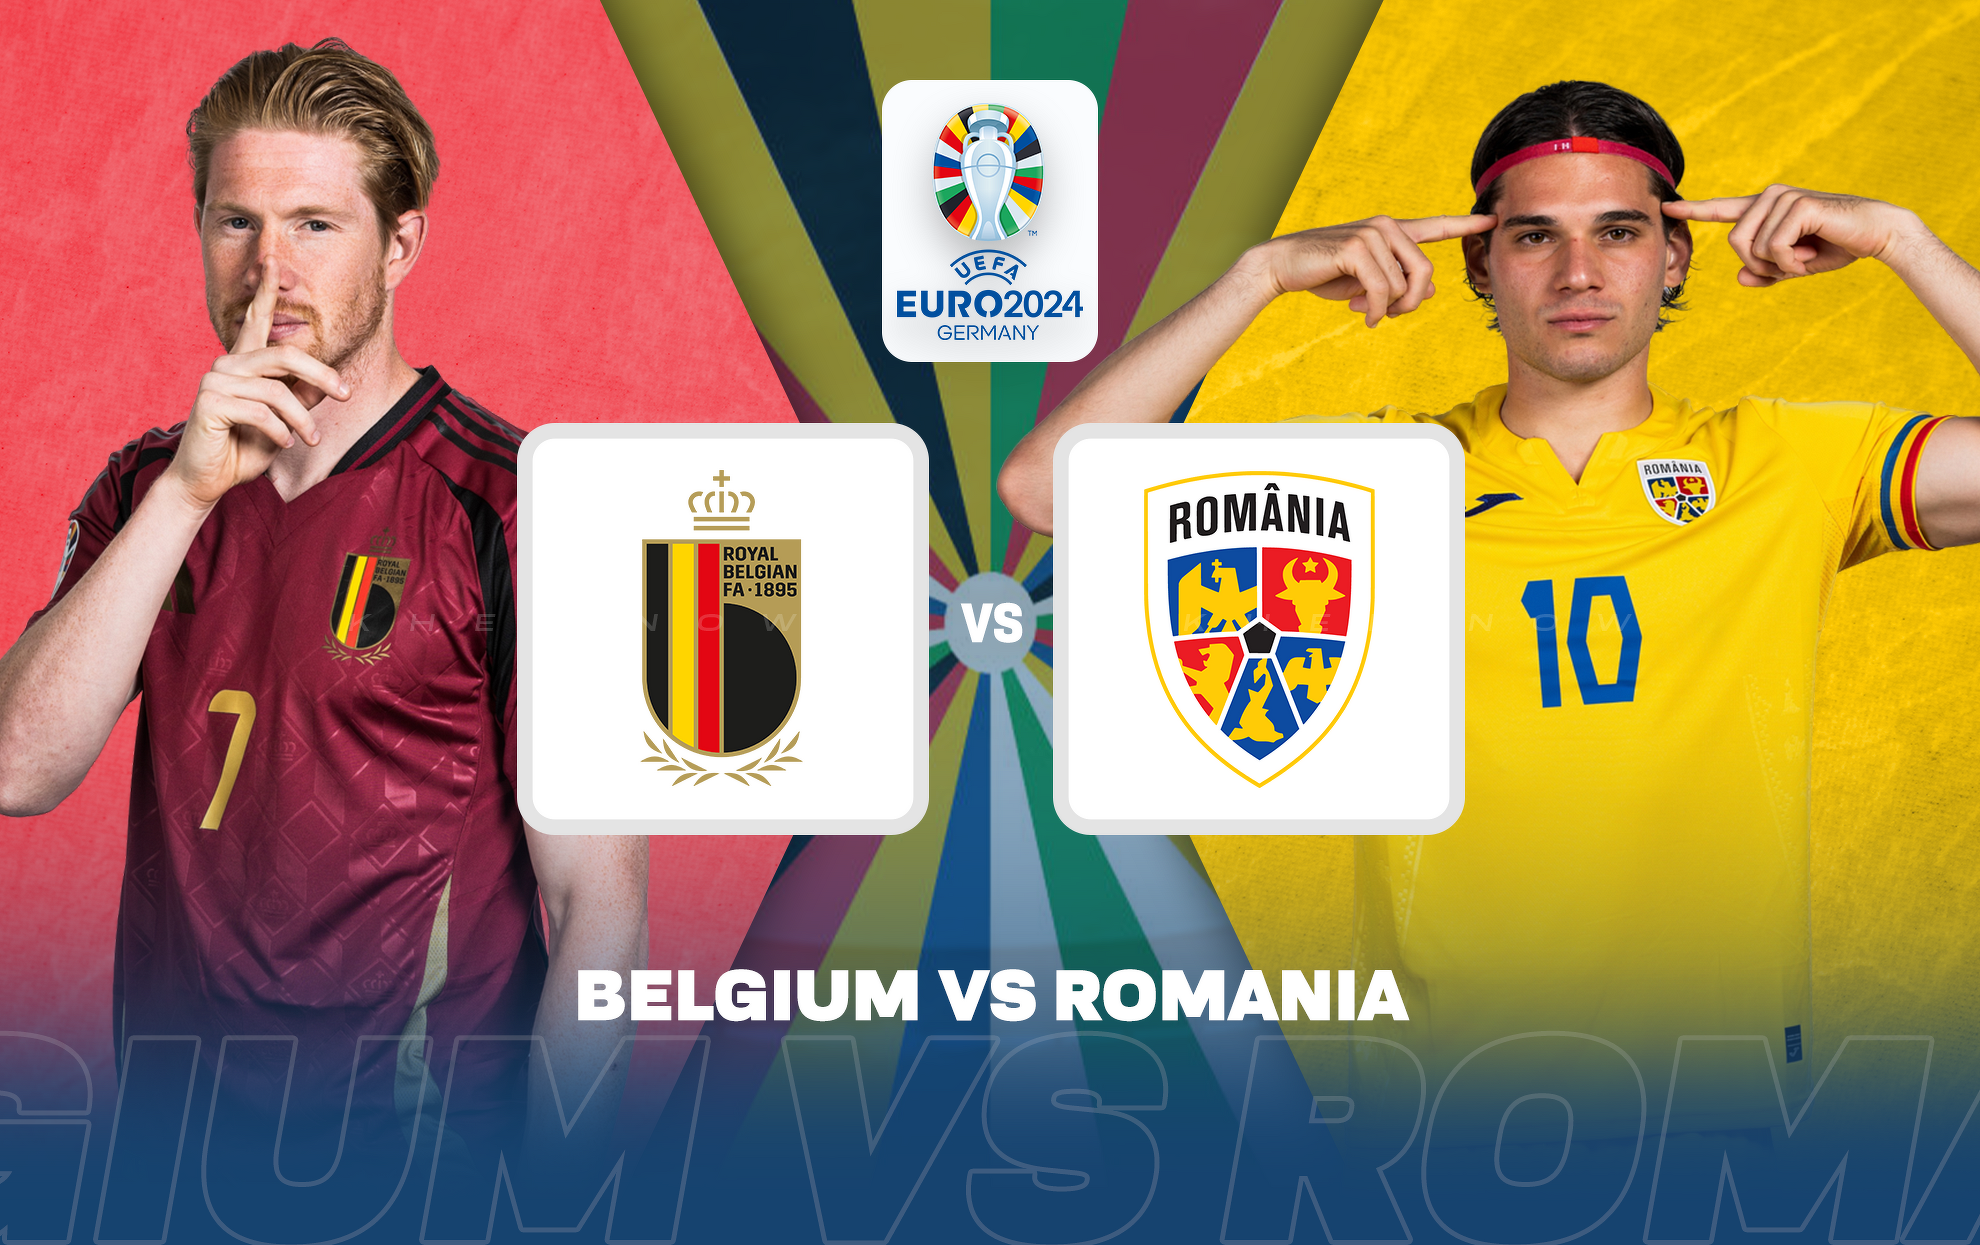 Belgium vs Romania Live streaming, TV channel, kickoff time & where